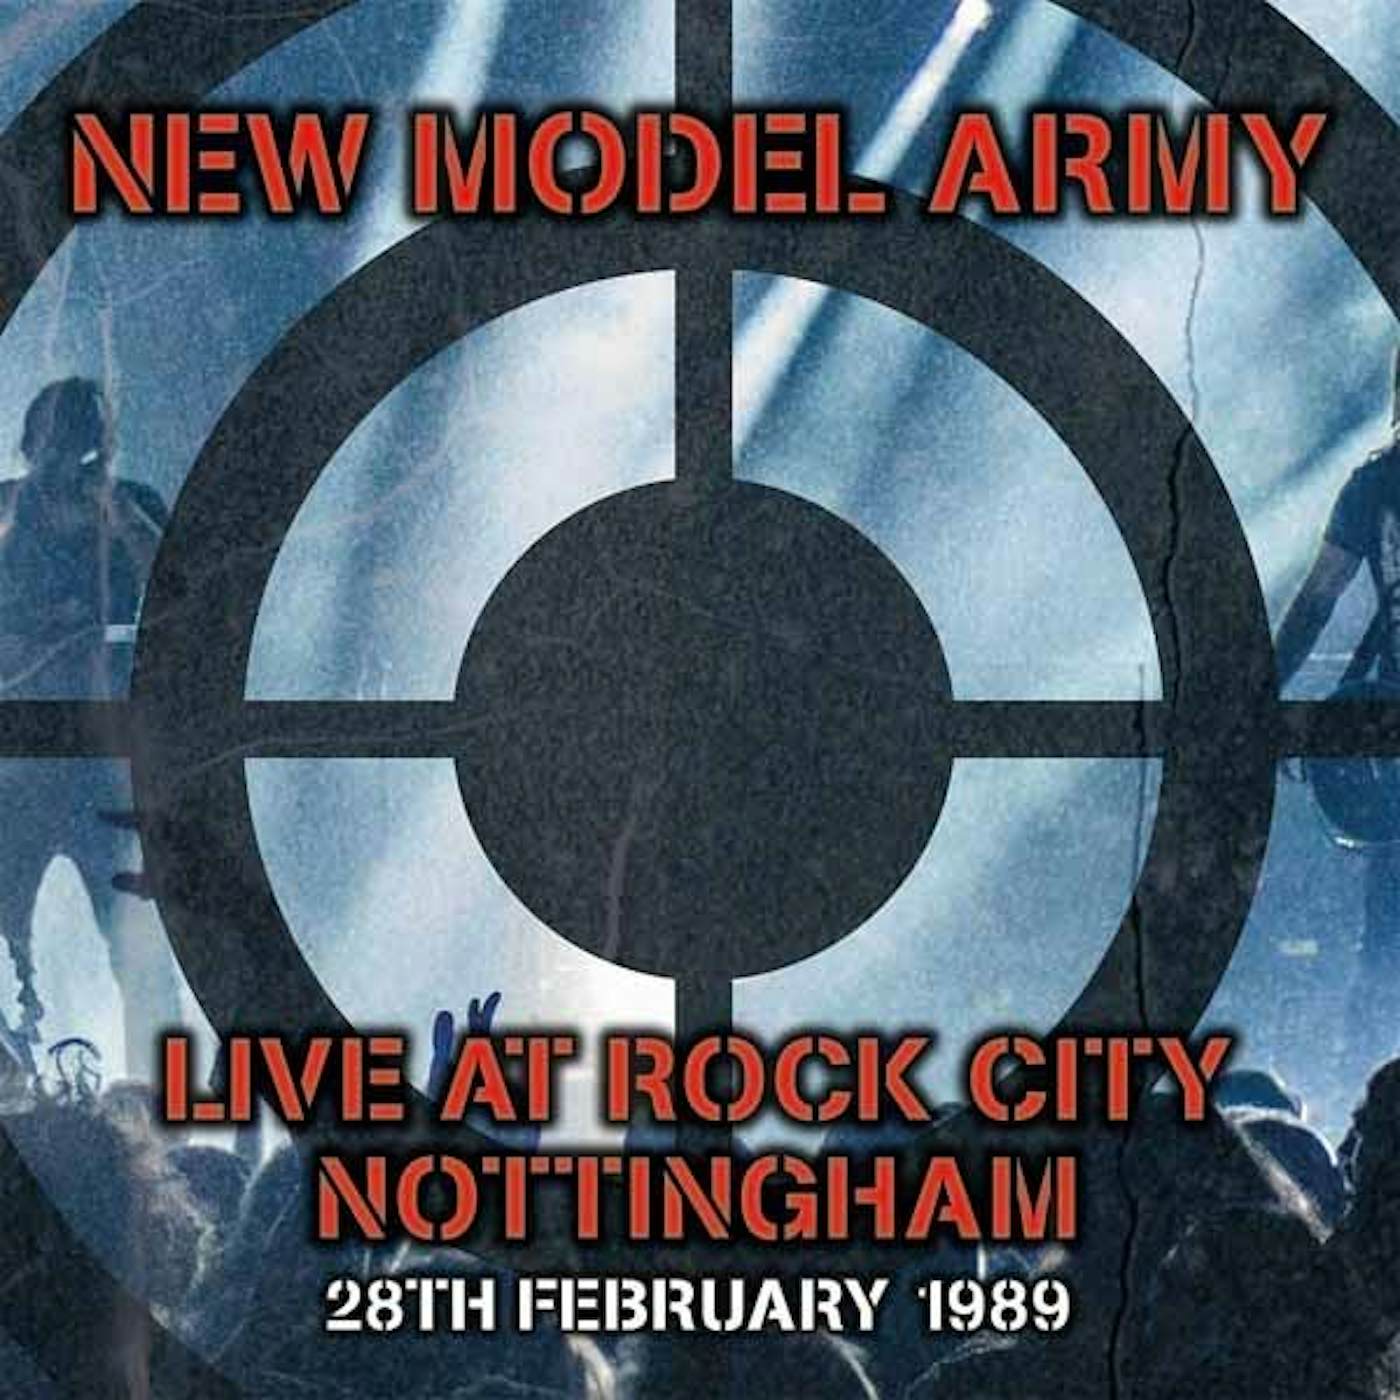 New Model Army LIVE AT ROCK CITY NOTTINGHAM 1989 Vinyl Record